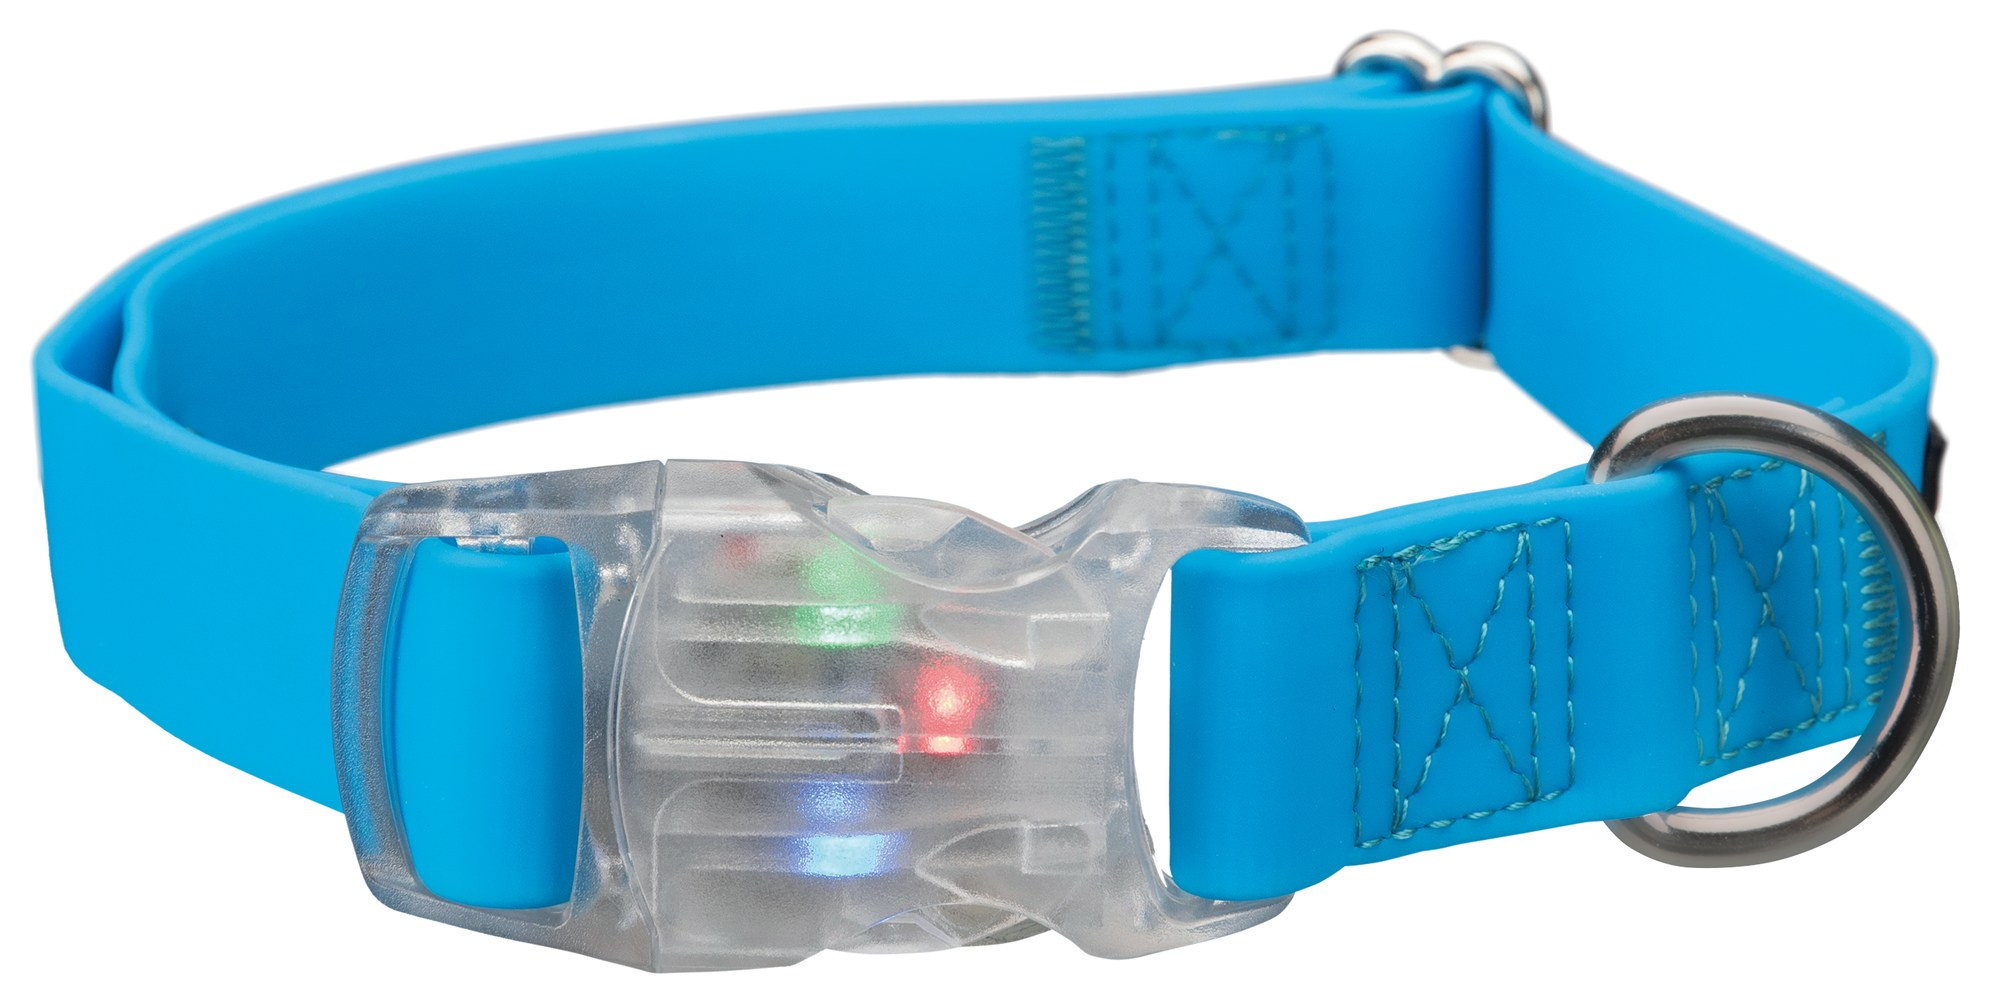 Zgarda cu LED/ USB S-M 30-45 cm/20 mm Albastru Neon 13312 petmart